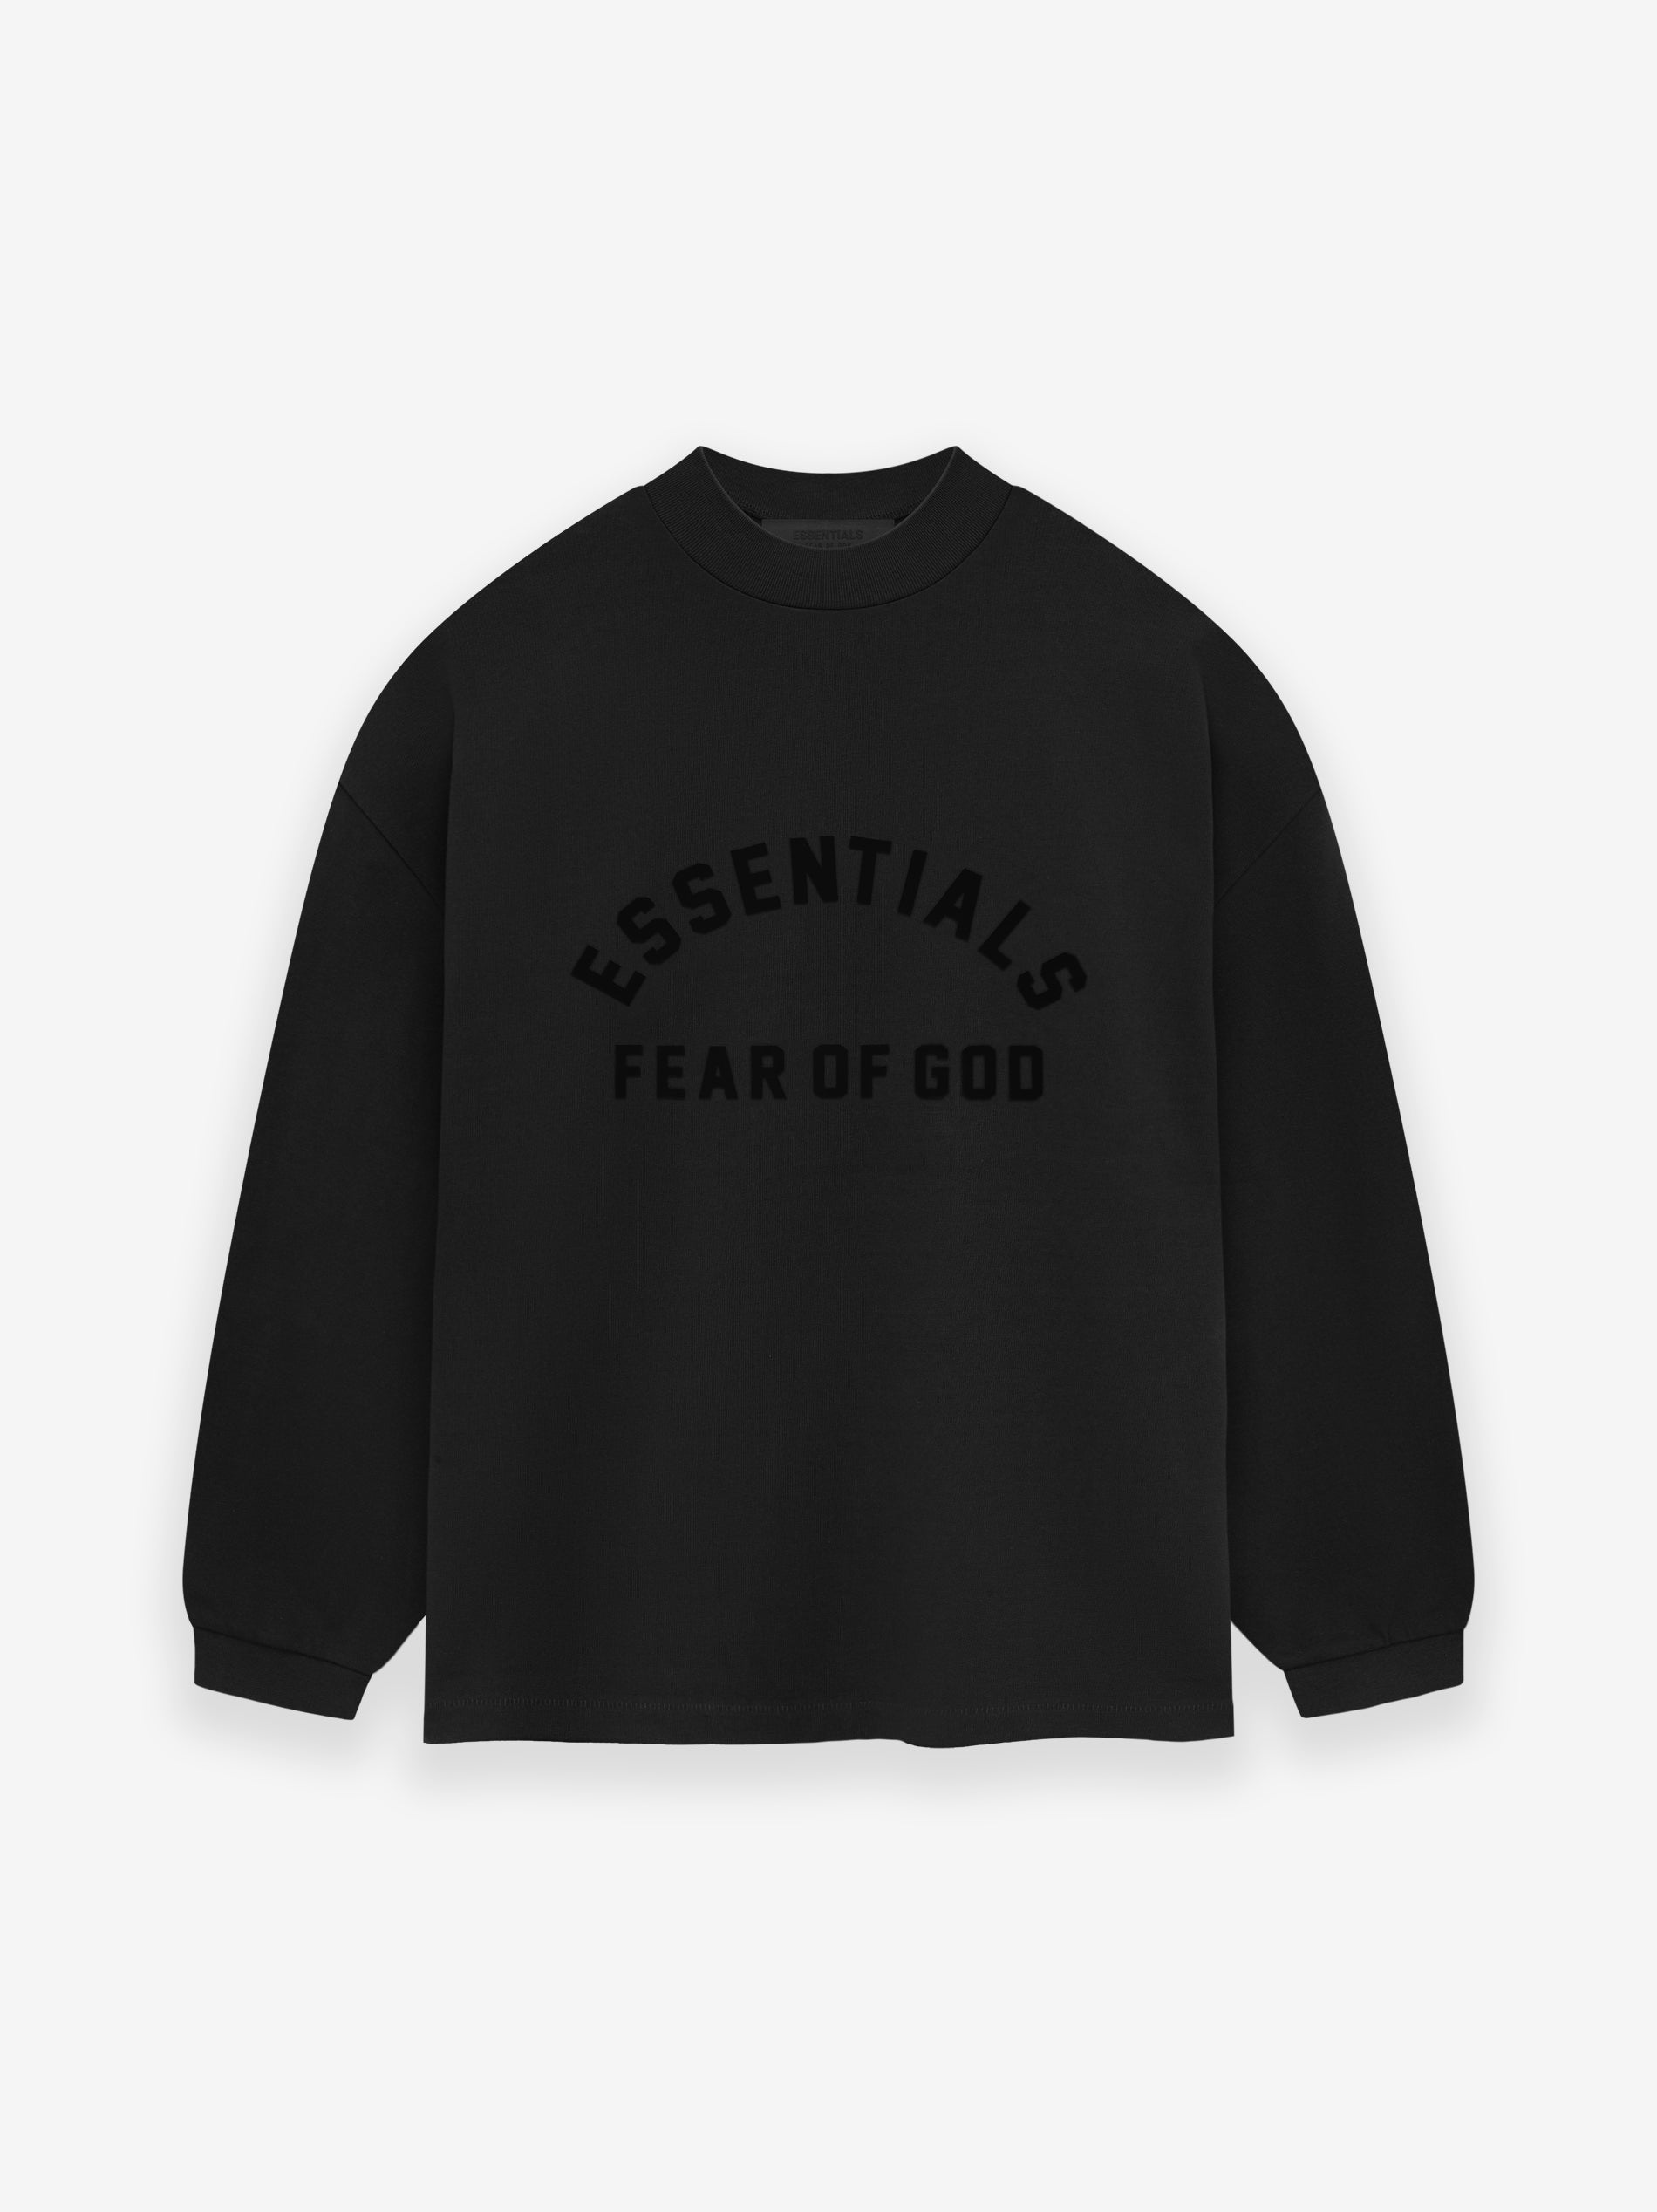 ESSENTIALS Longsleeve T-shirt in Jet Black | Fear of God